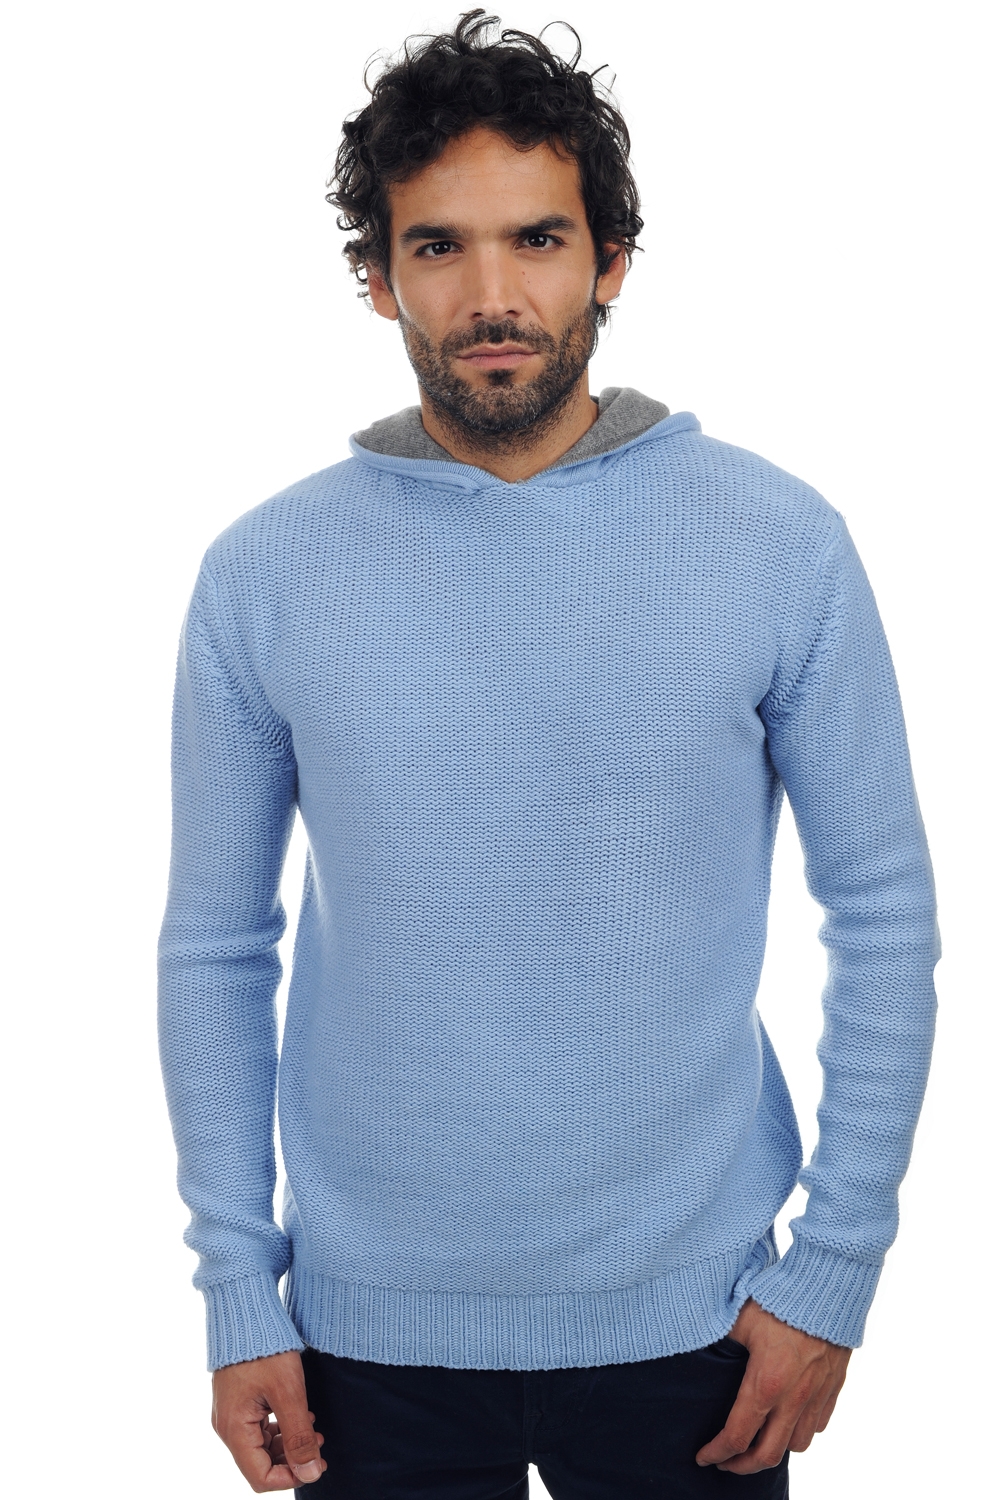 Yak men chunky sweater conor sky blue grey marl s